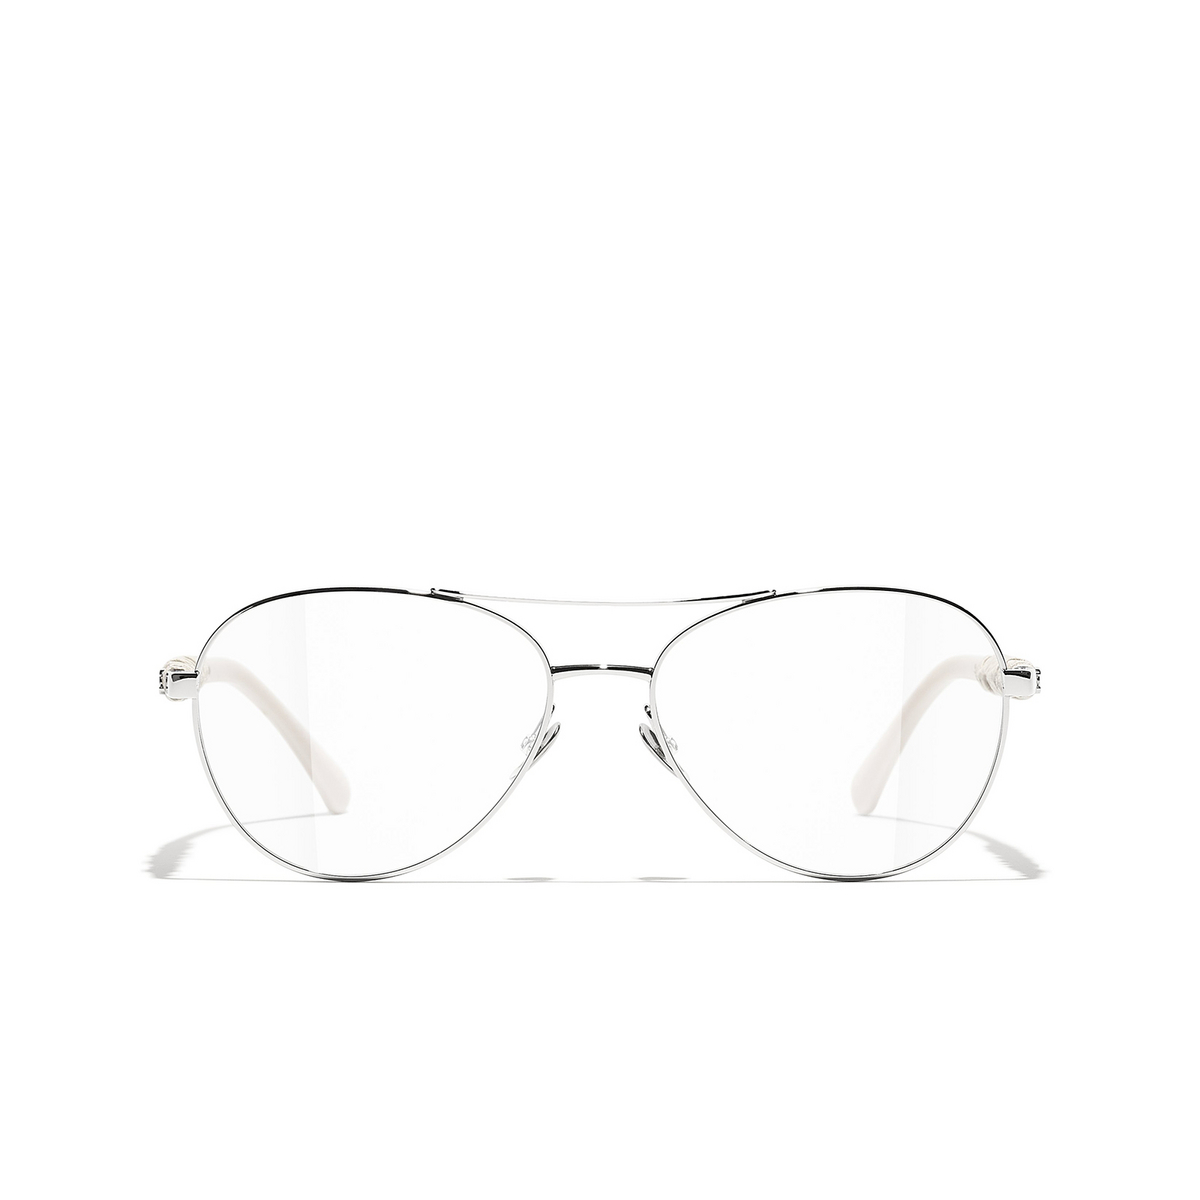 CHANEL pilot Eyeglasses C262 Silver & White - front view